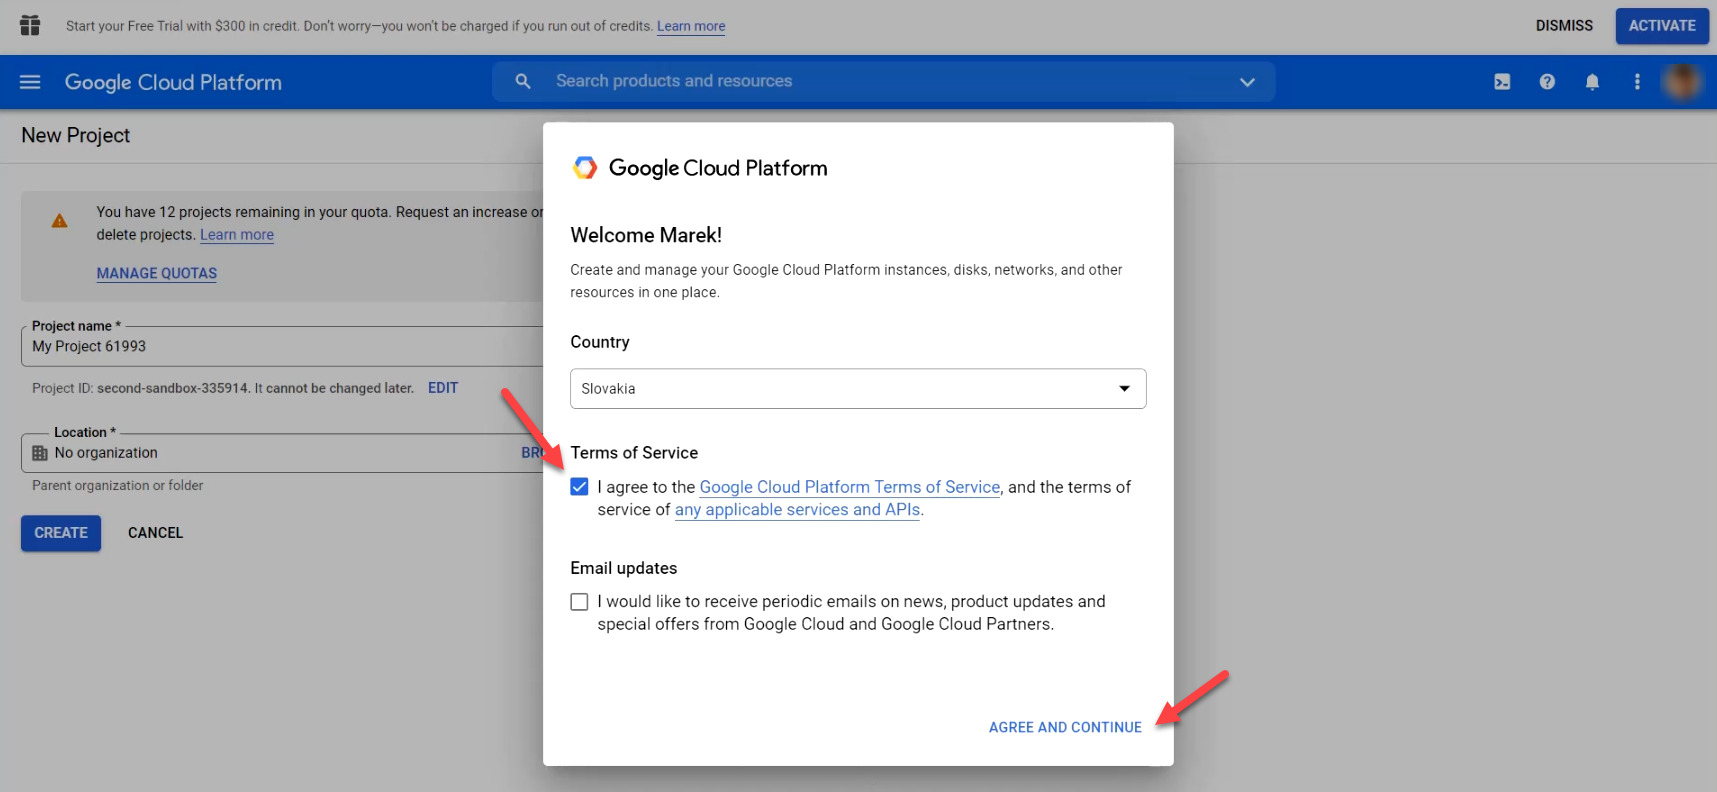 Confirmation of Google Cloud Platform terms of service